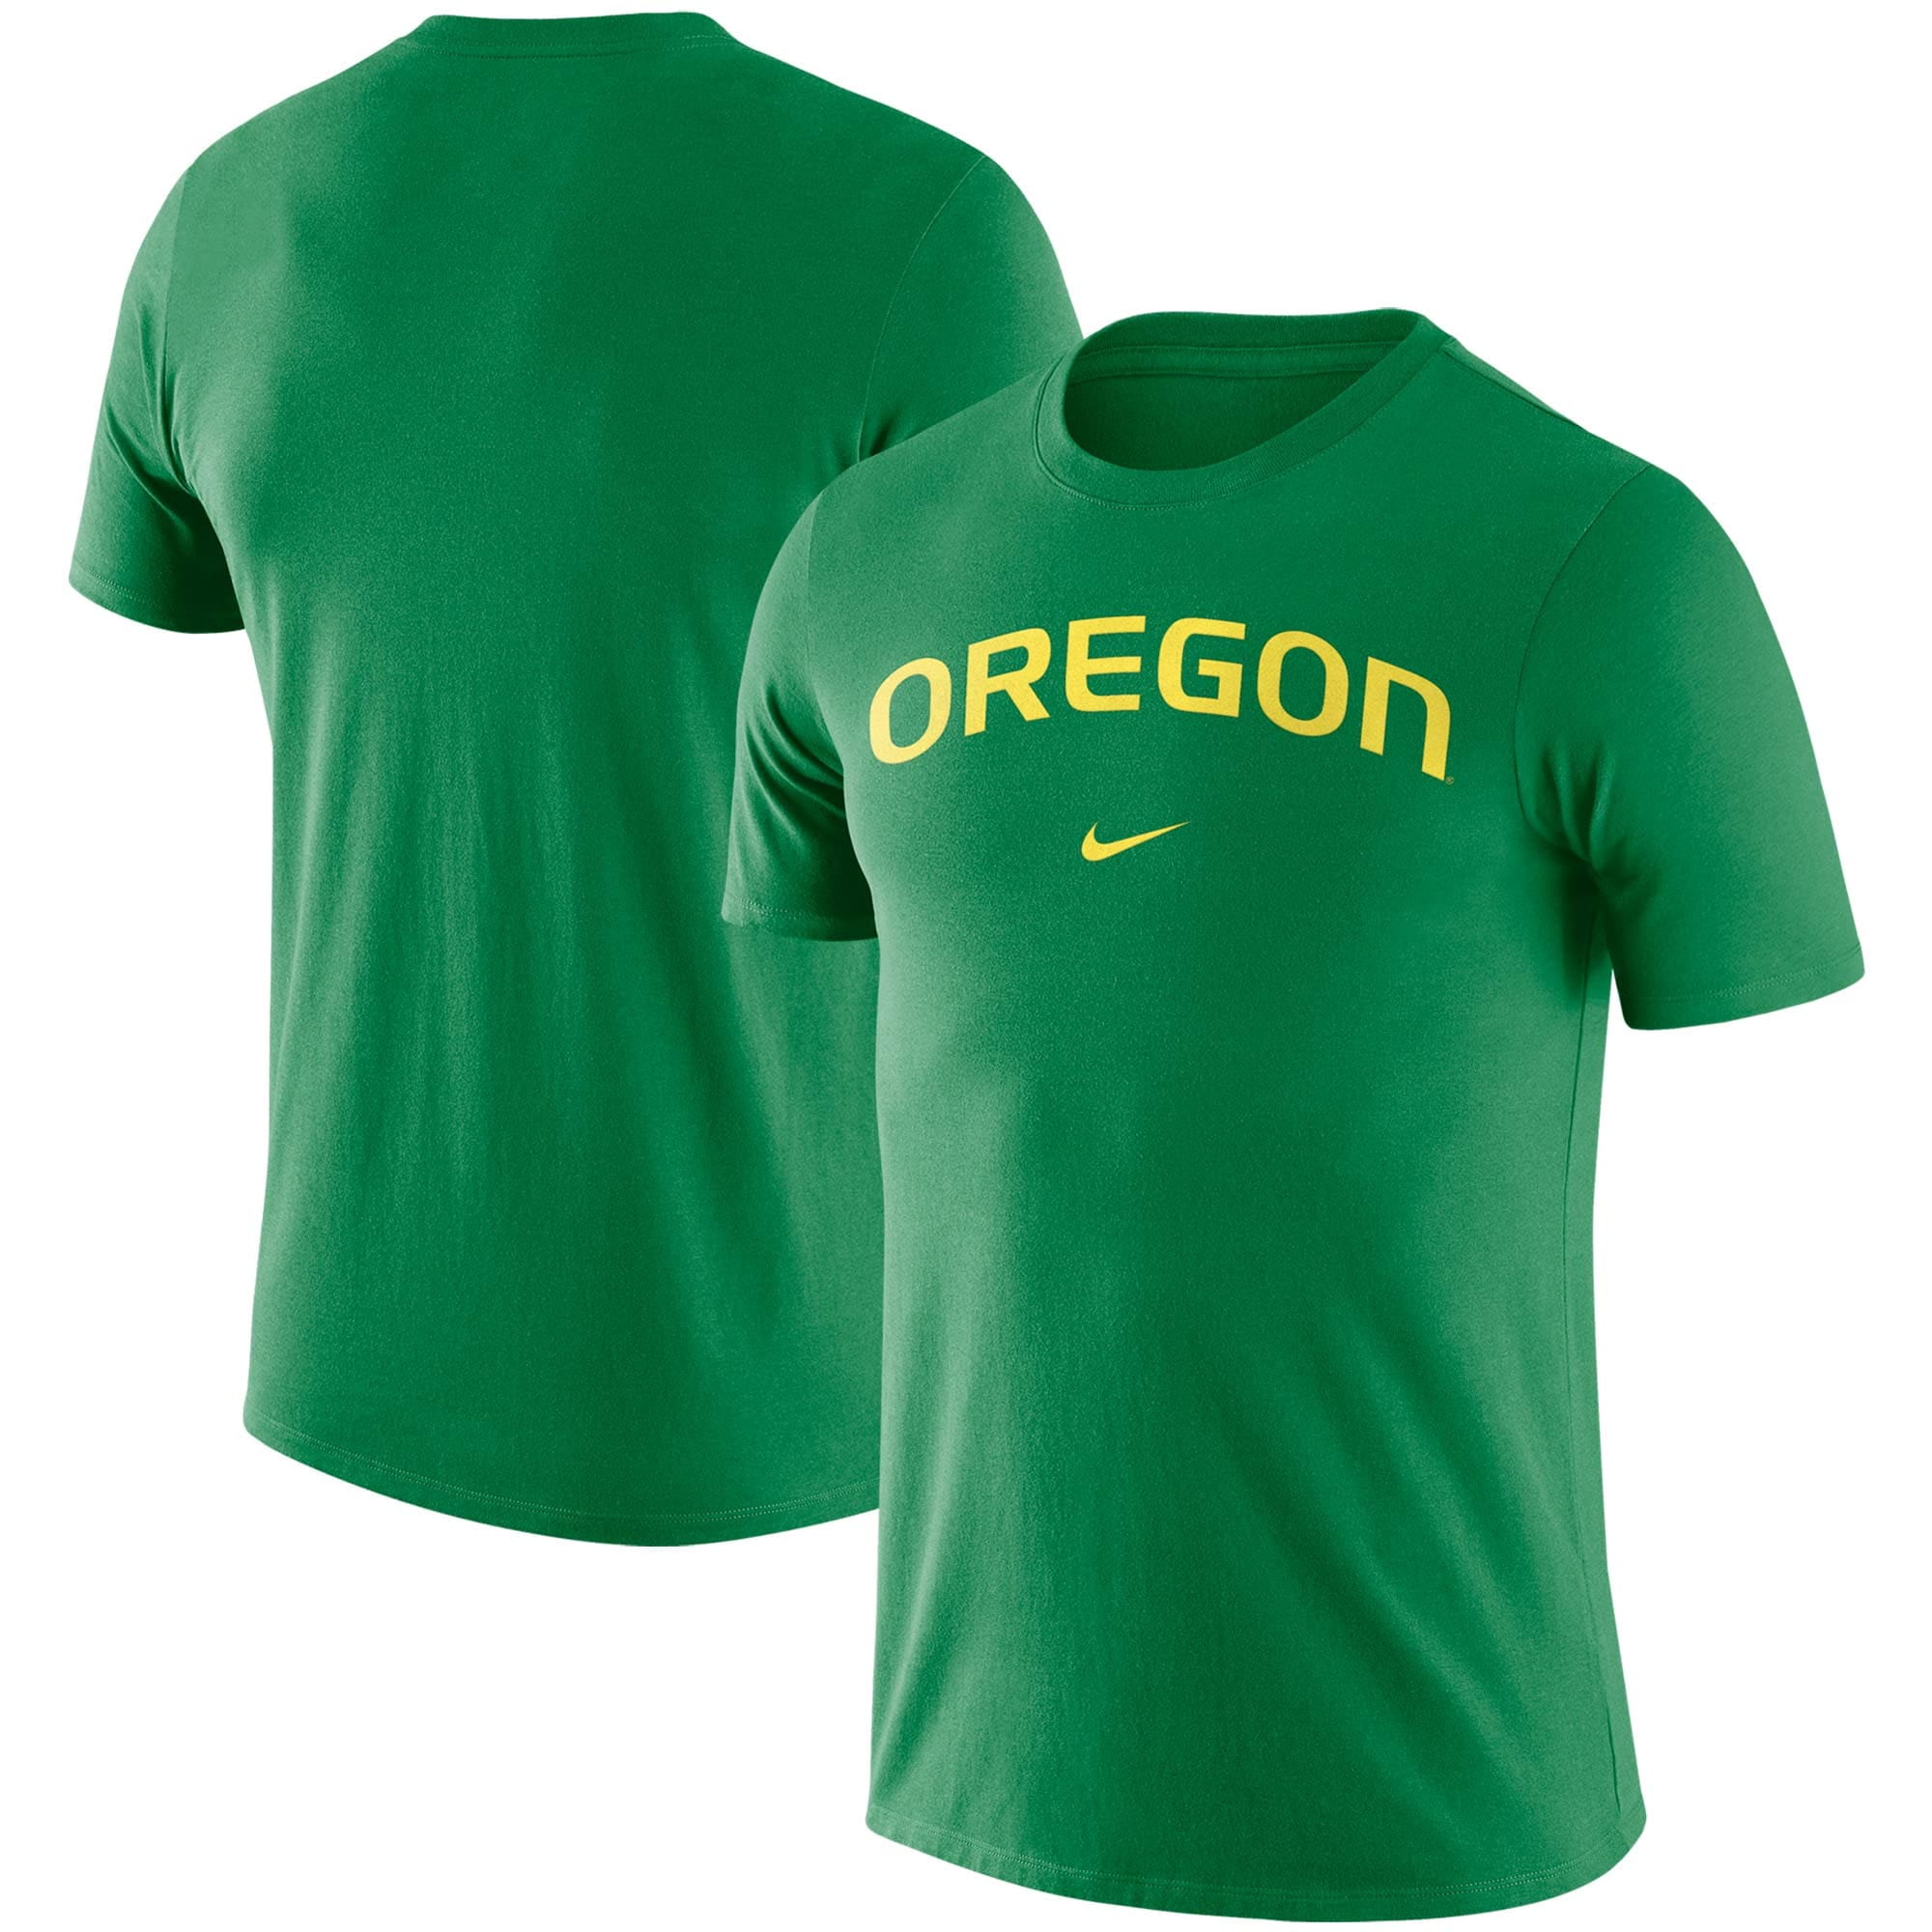 Oregon State Shirt Oregon Shirt Sweet Home Oregon Oregon Travel Shirt Home State Shirt